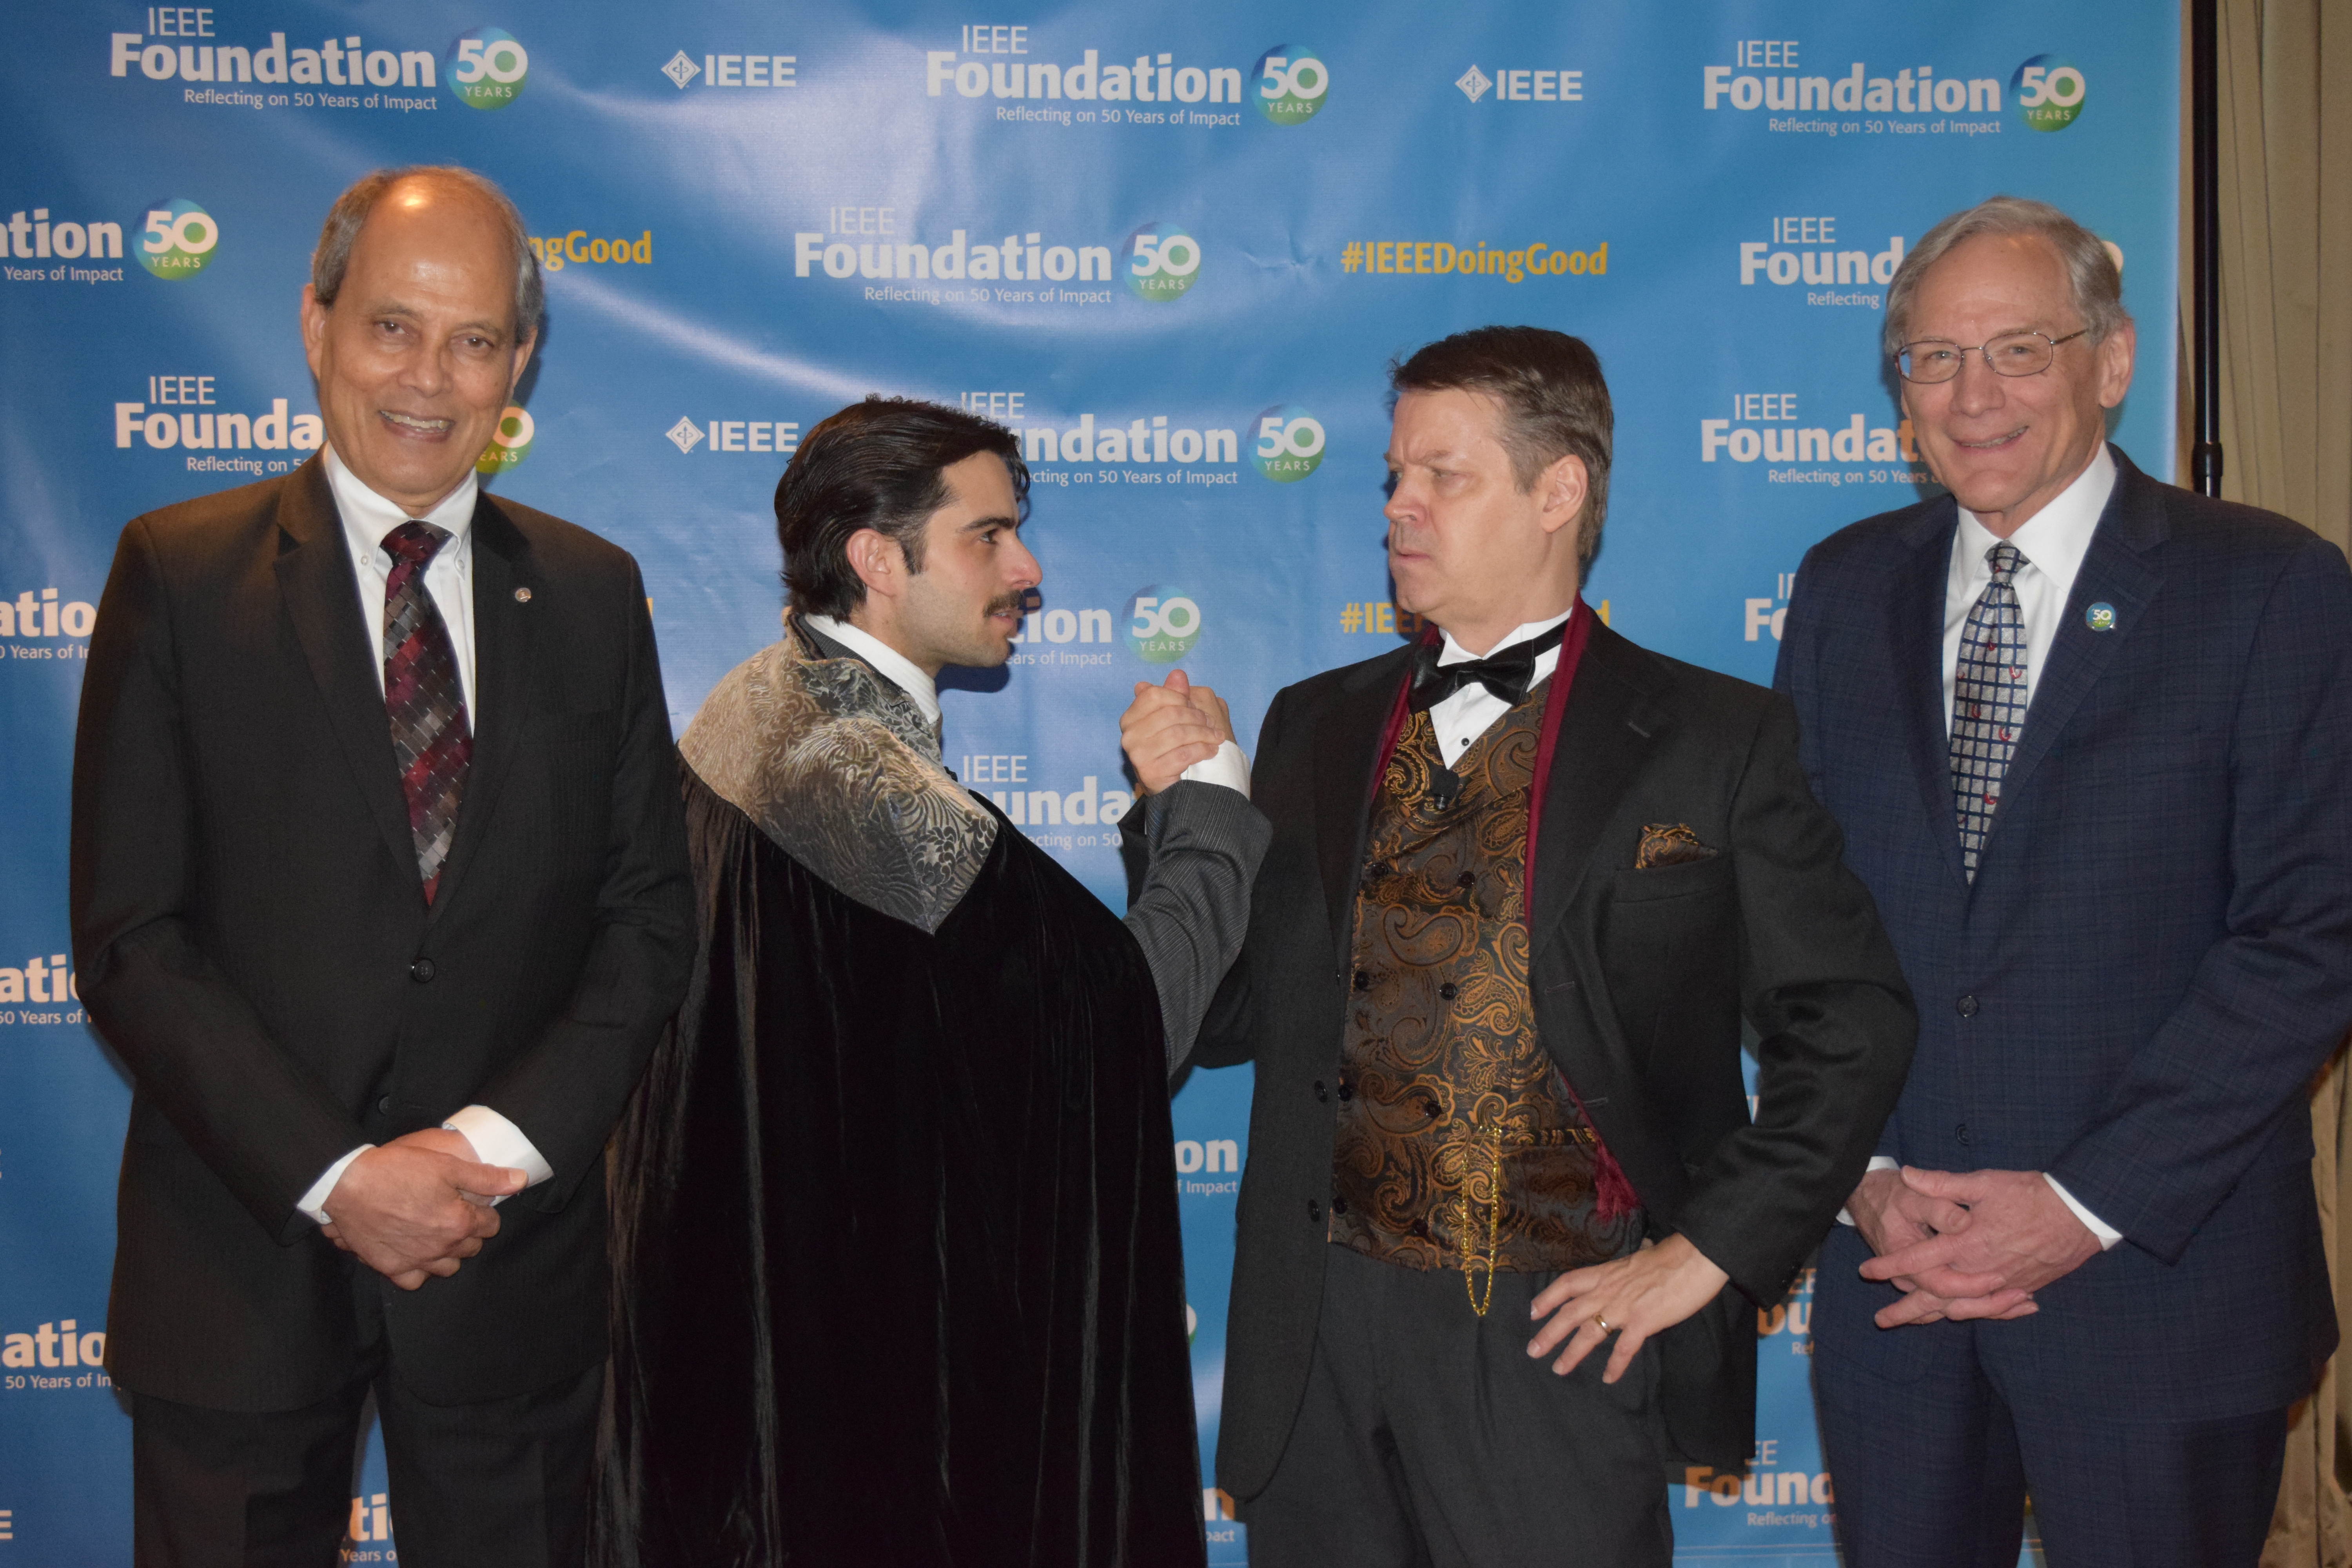 Saifur, John, Nikola Tesla, and Thomas Edison Celebrate the IEEE Foundation 50th Anniversary.